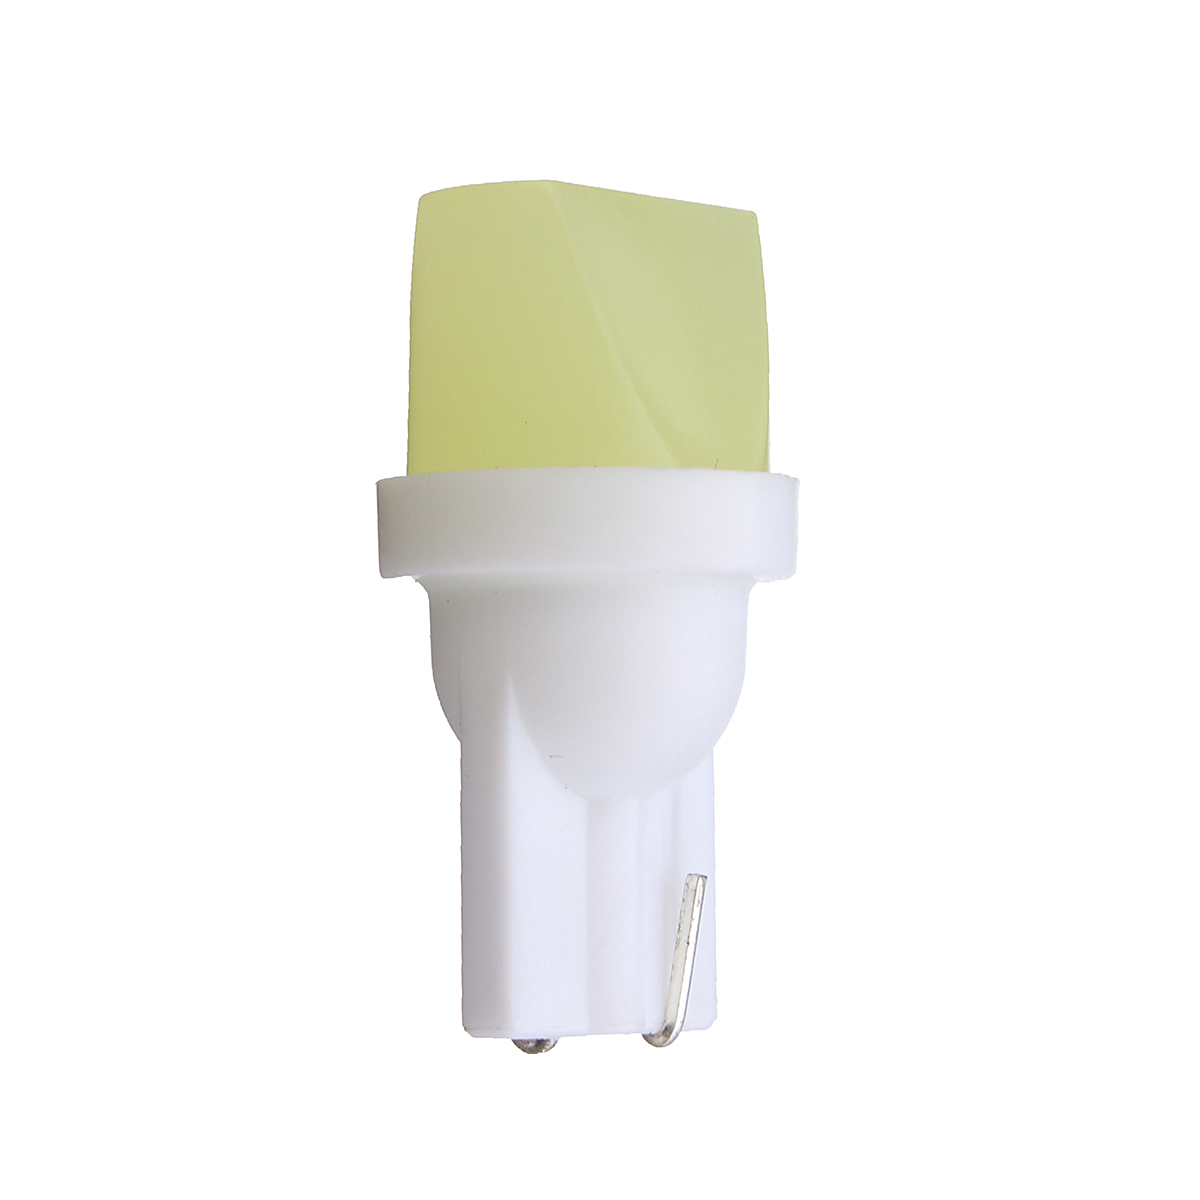 12V T10 COB LED Light Car Side Marker Reading Interior Dome Lamp Bulb Ceramic White